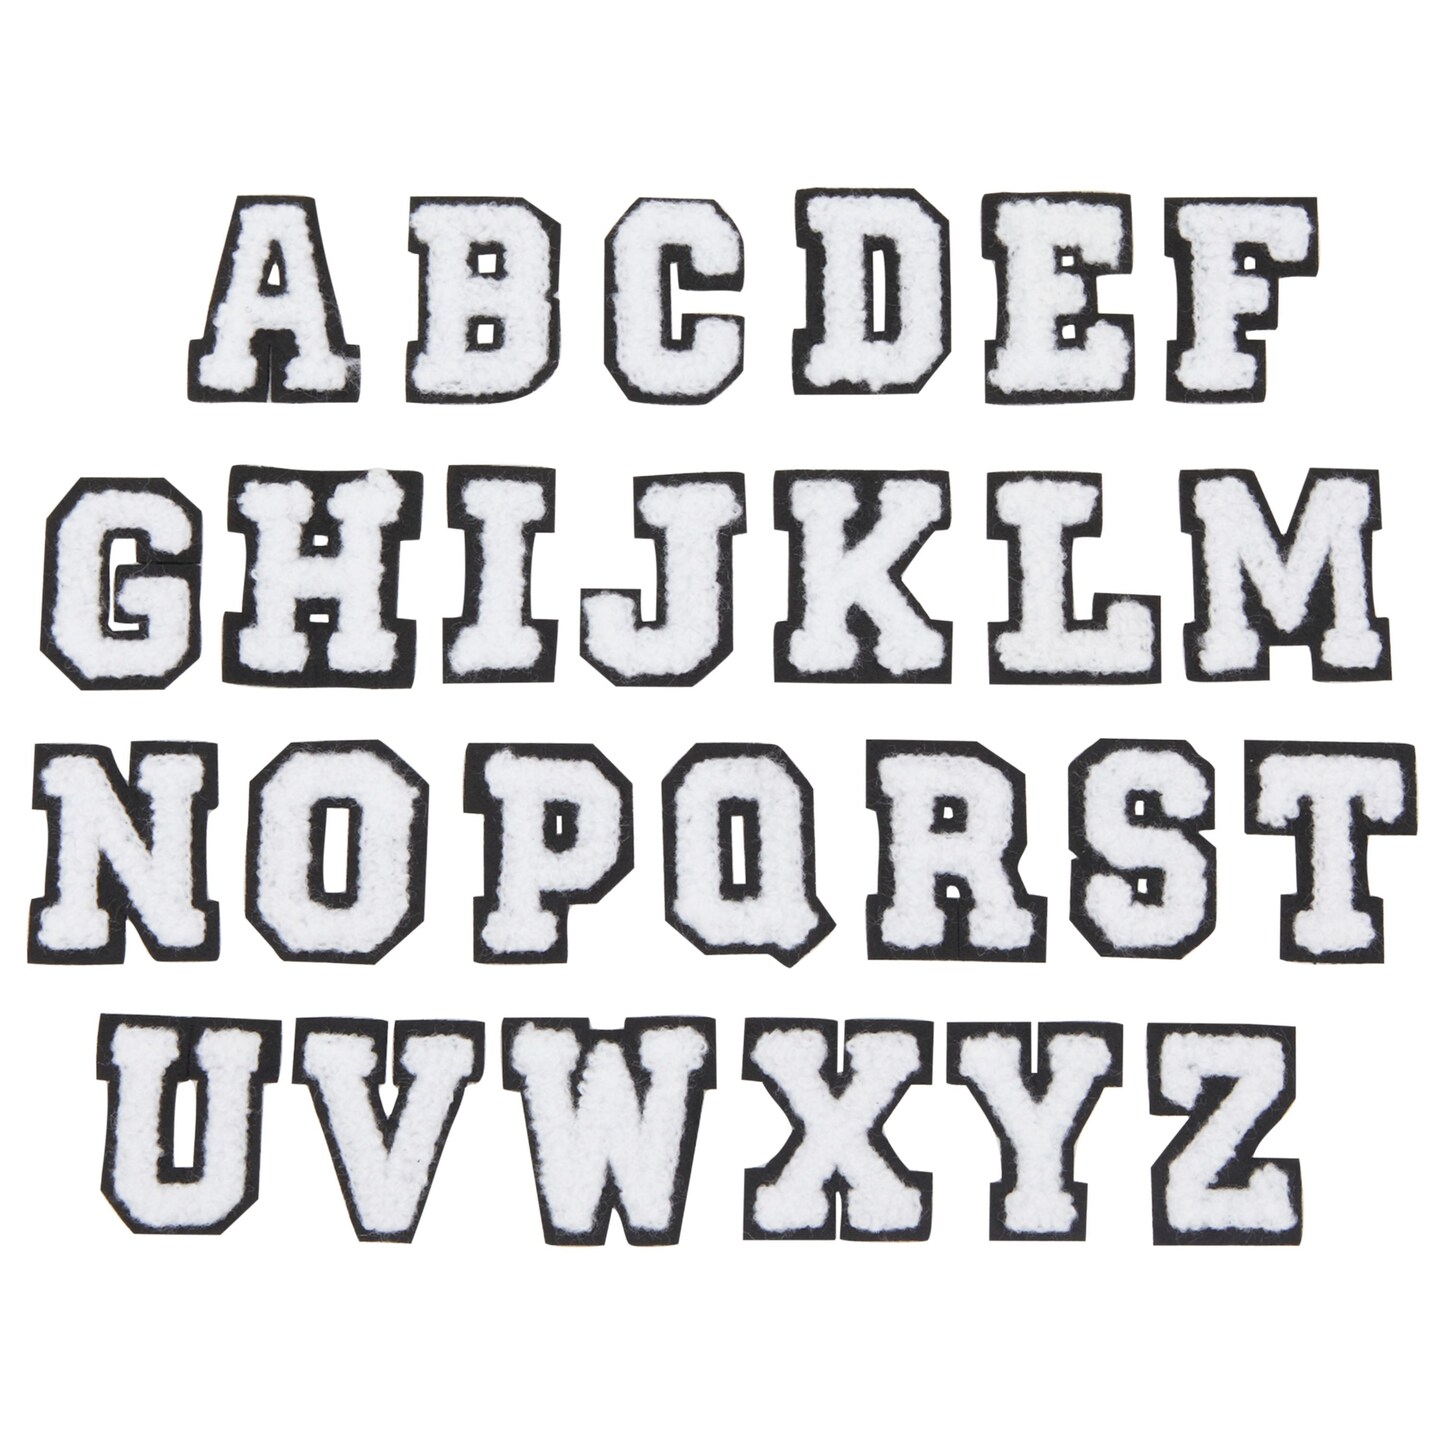 Alphabet Iron-On Patches